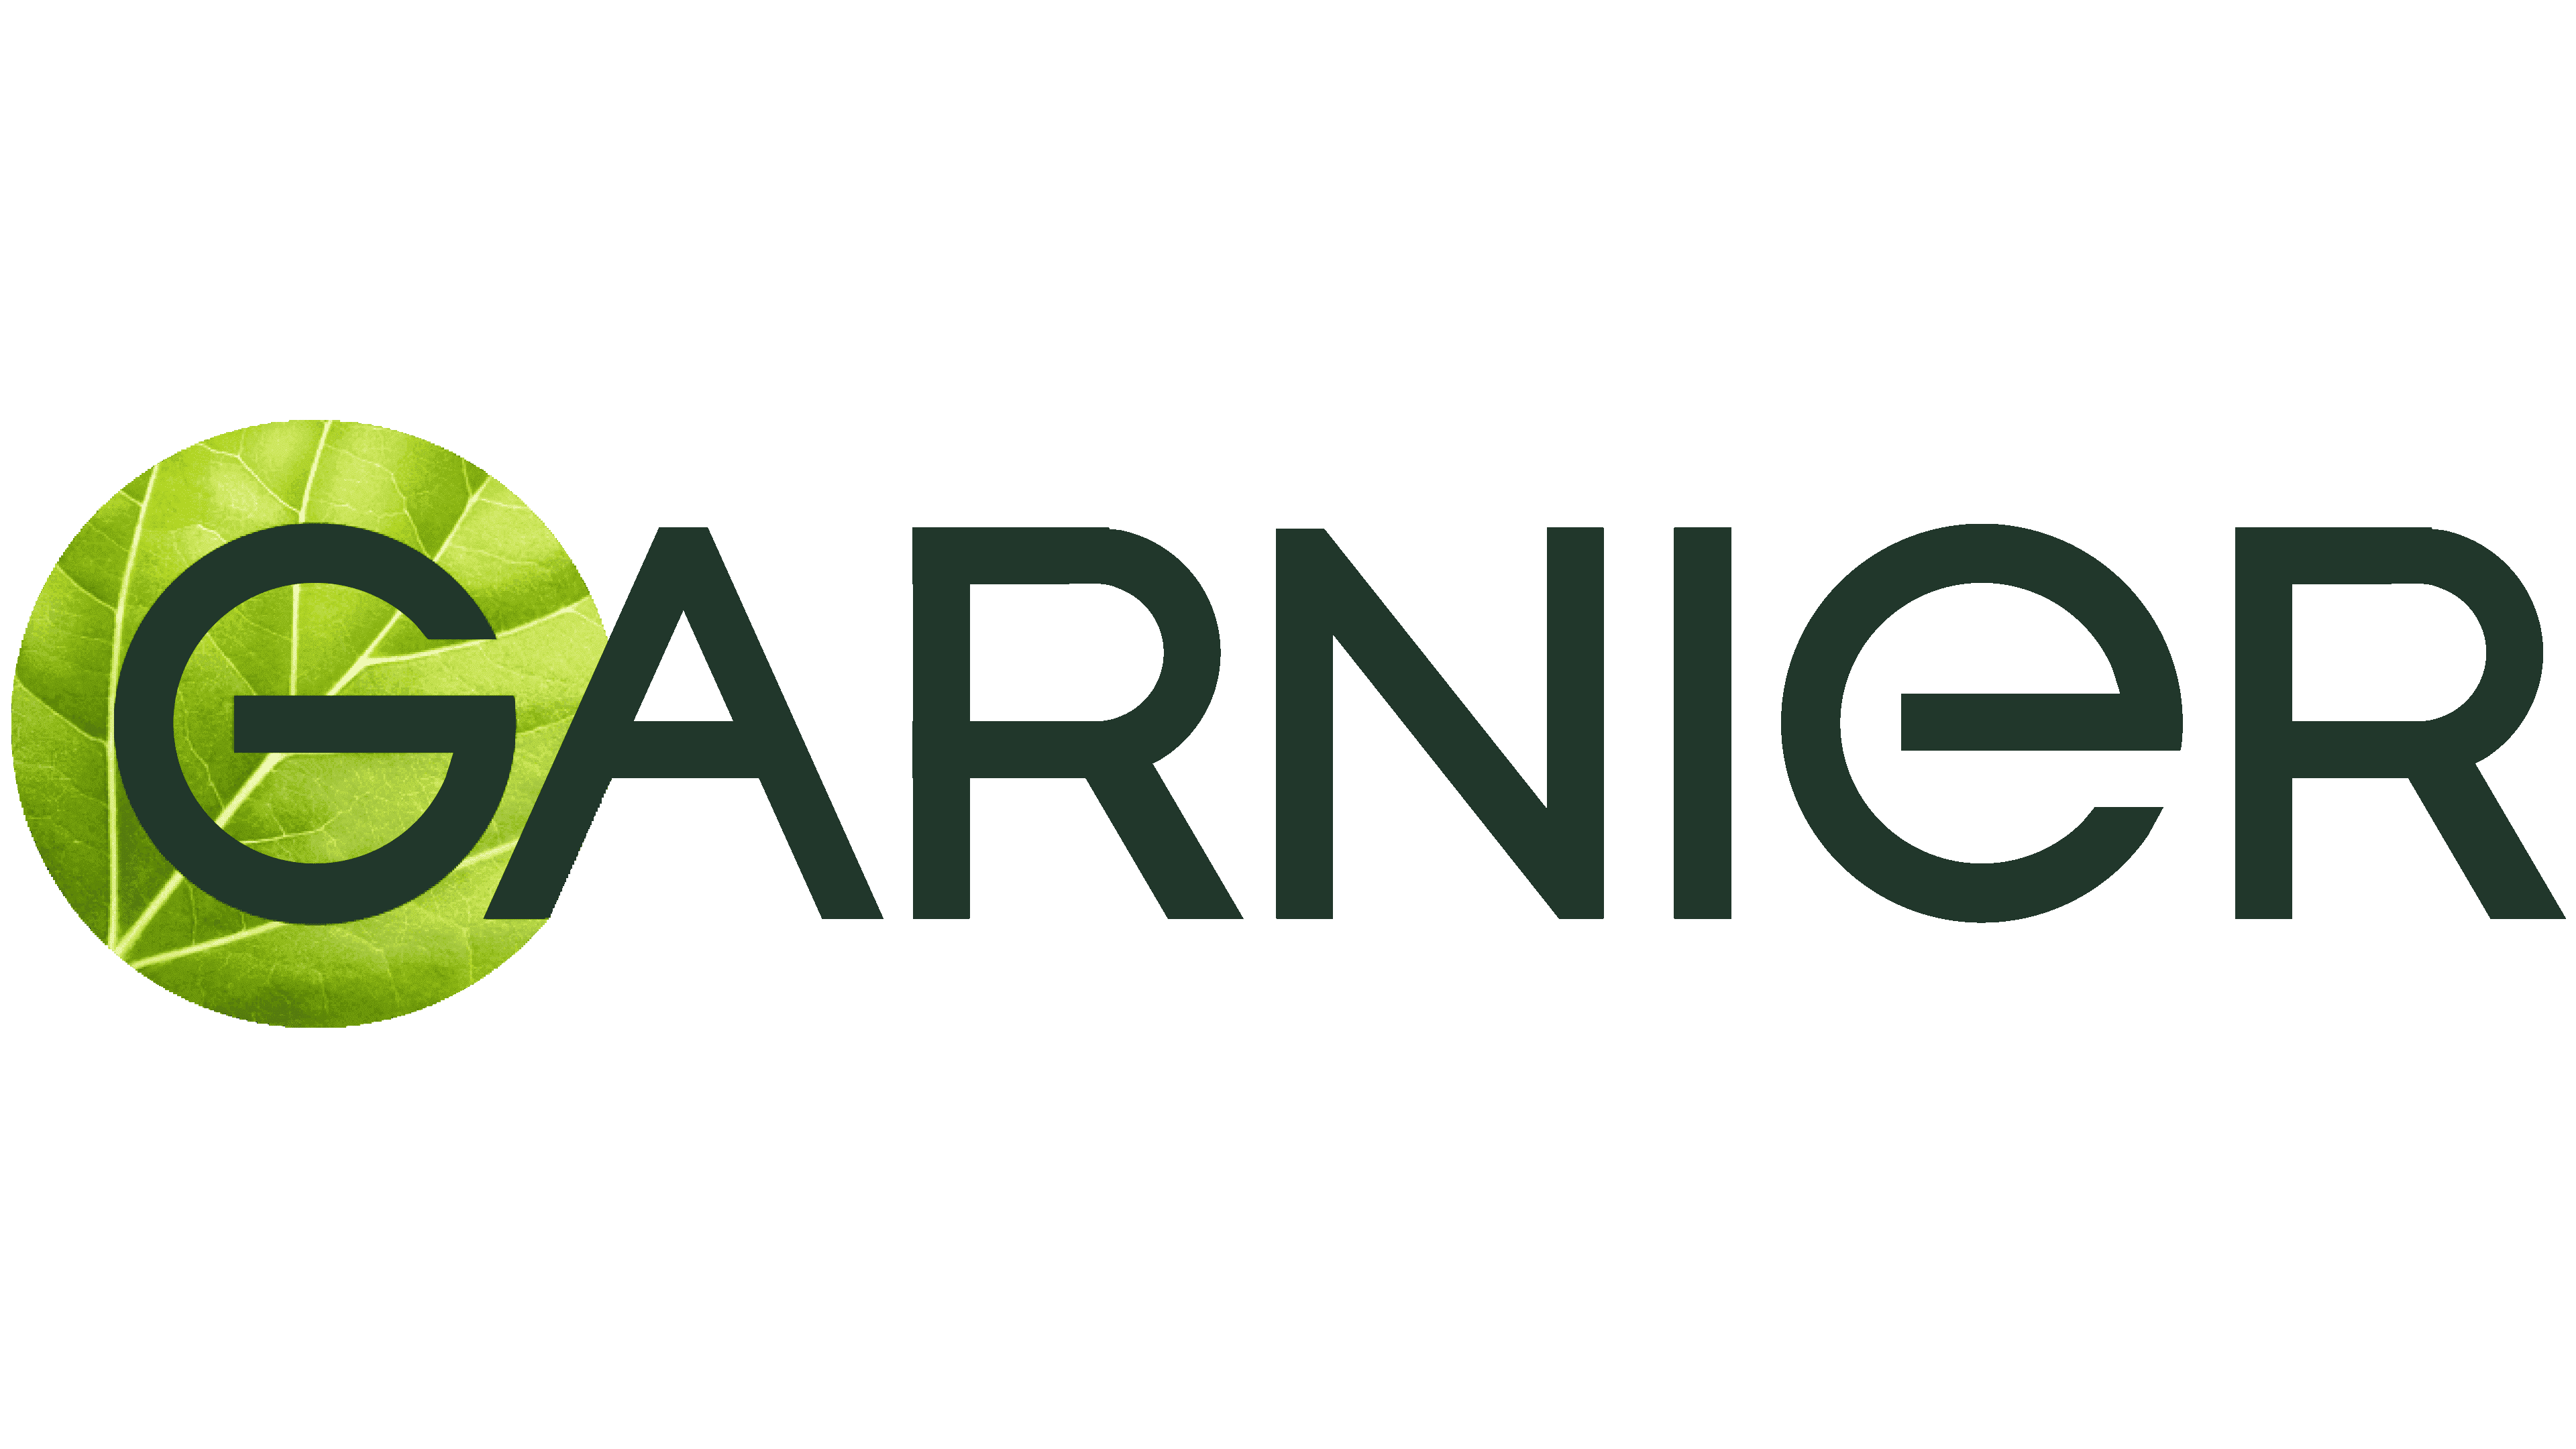 Garnier-logo